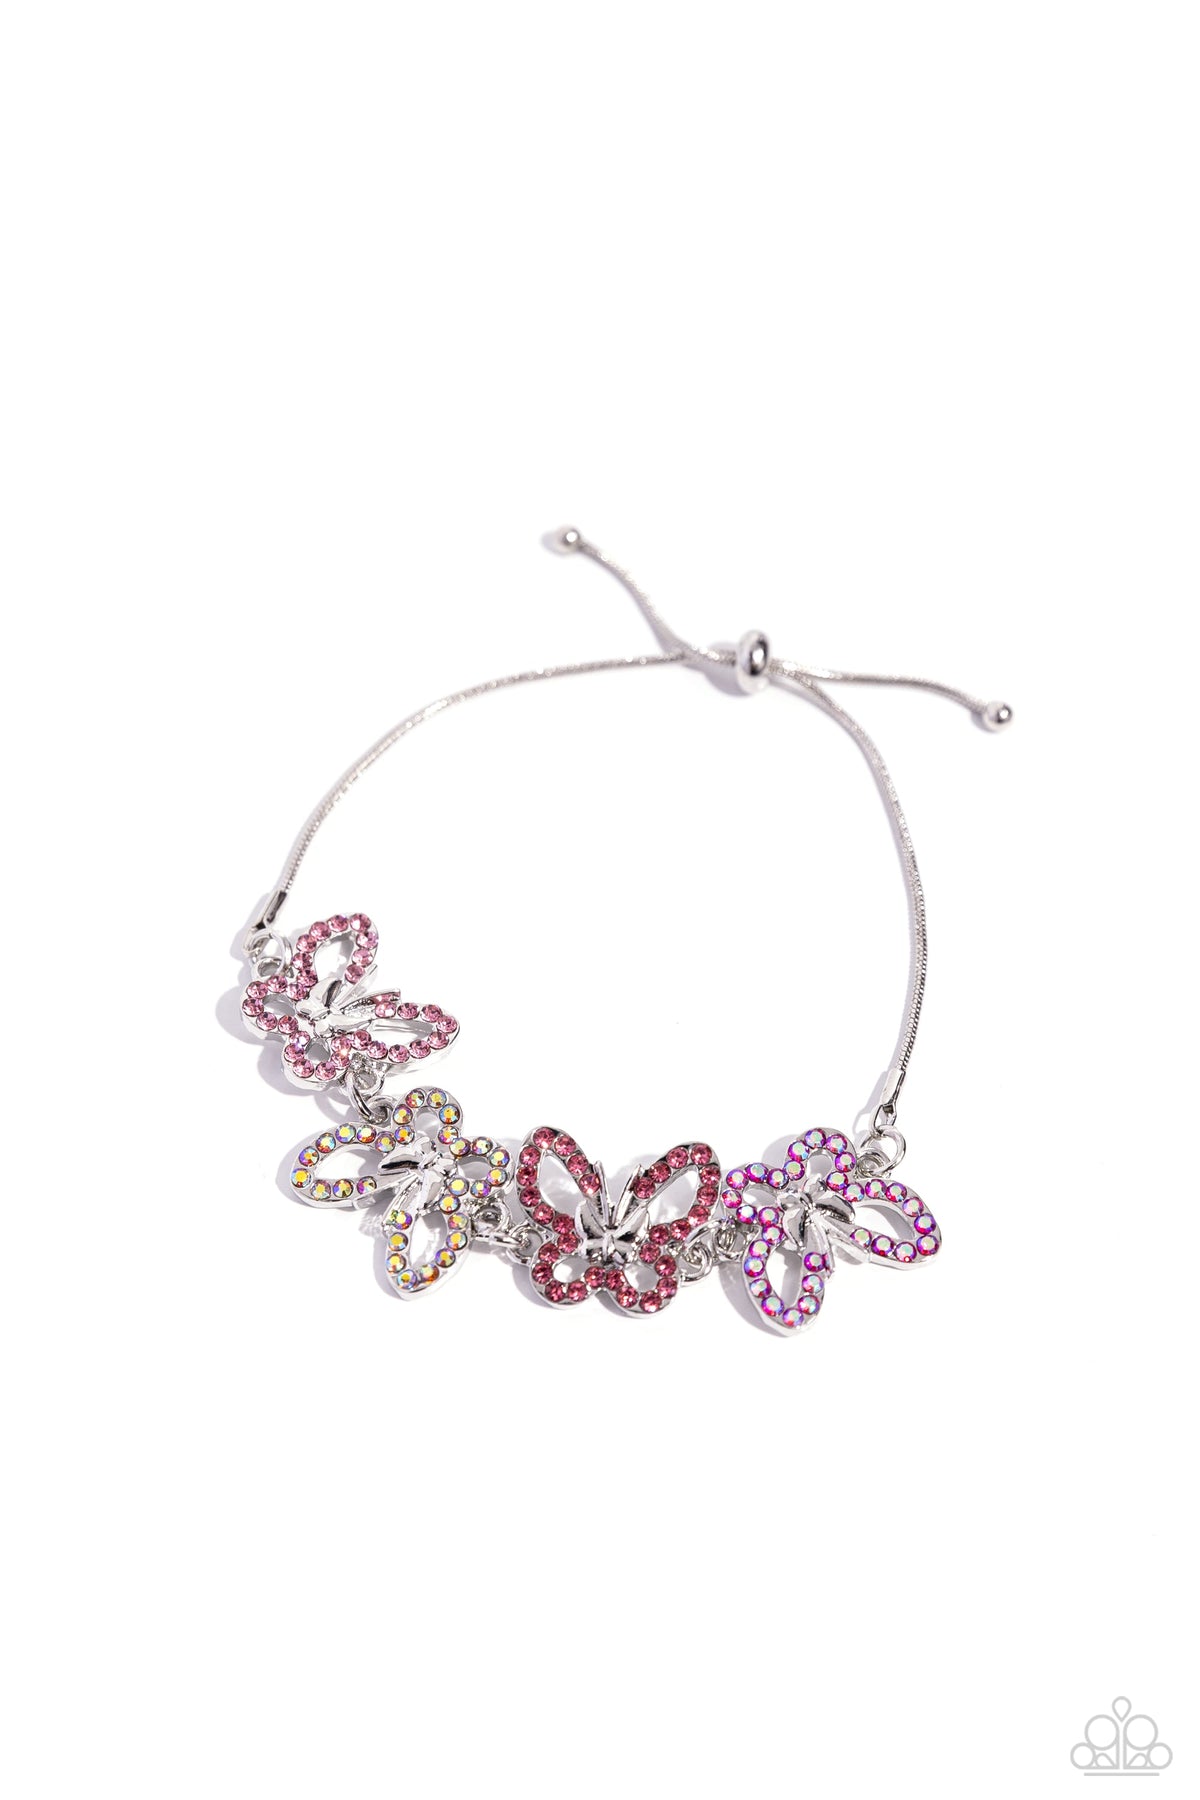 Butterfly Belonging Pink &amp; Iridescent Rhinestone Bracelet - Paparazzi Accessories- lightbox - CarasShop.com - $5 Jewelry by Cara Jewels